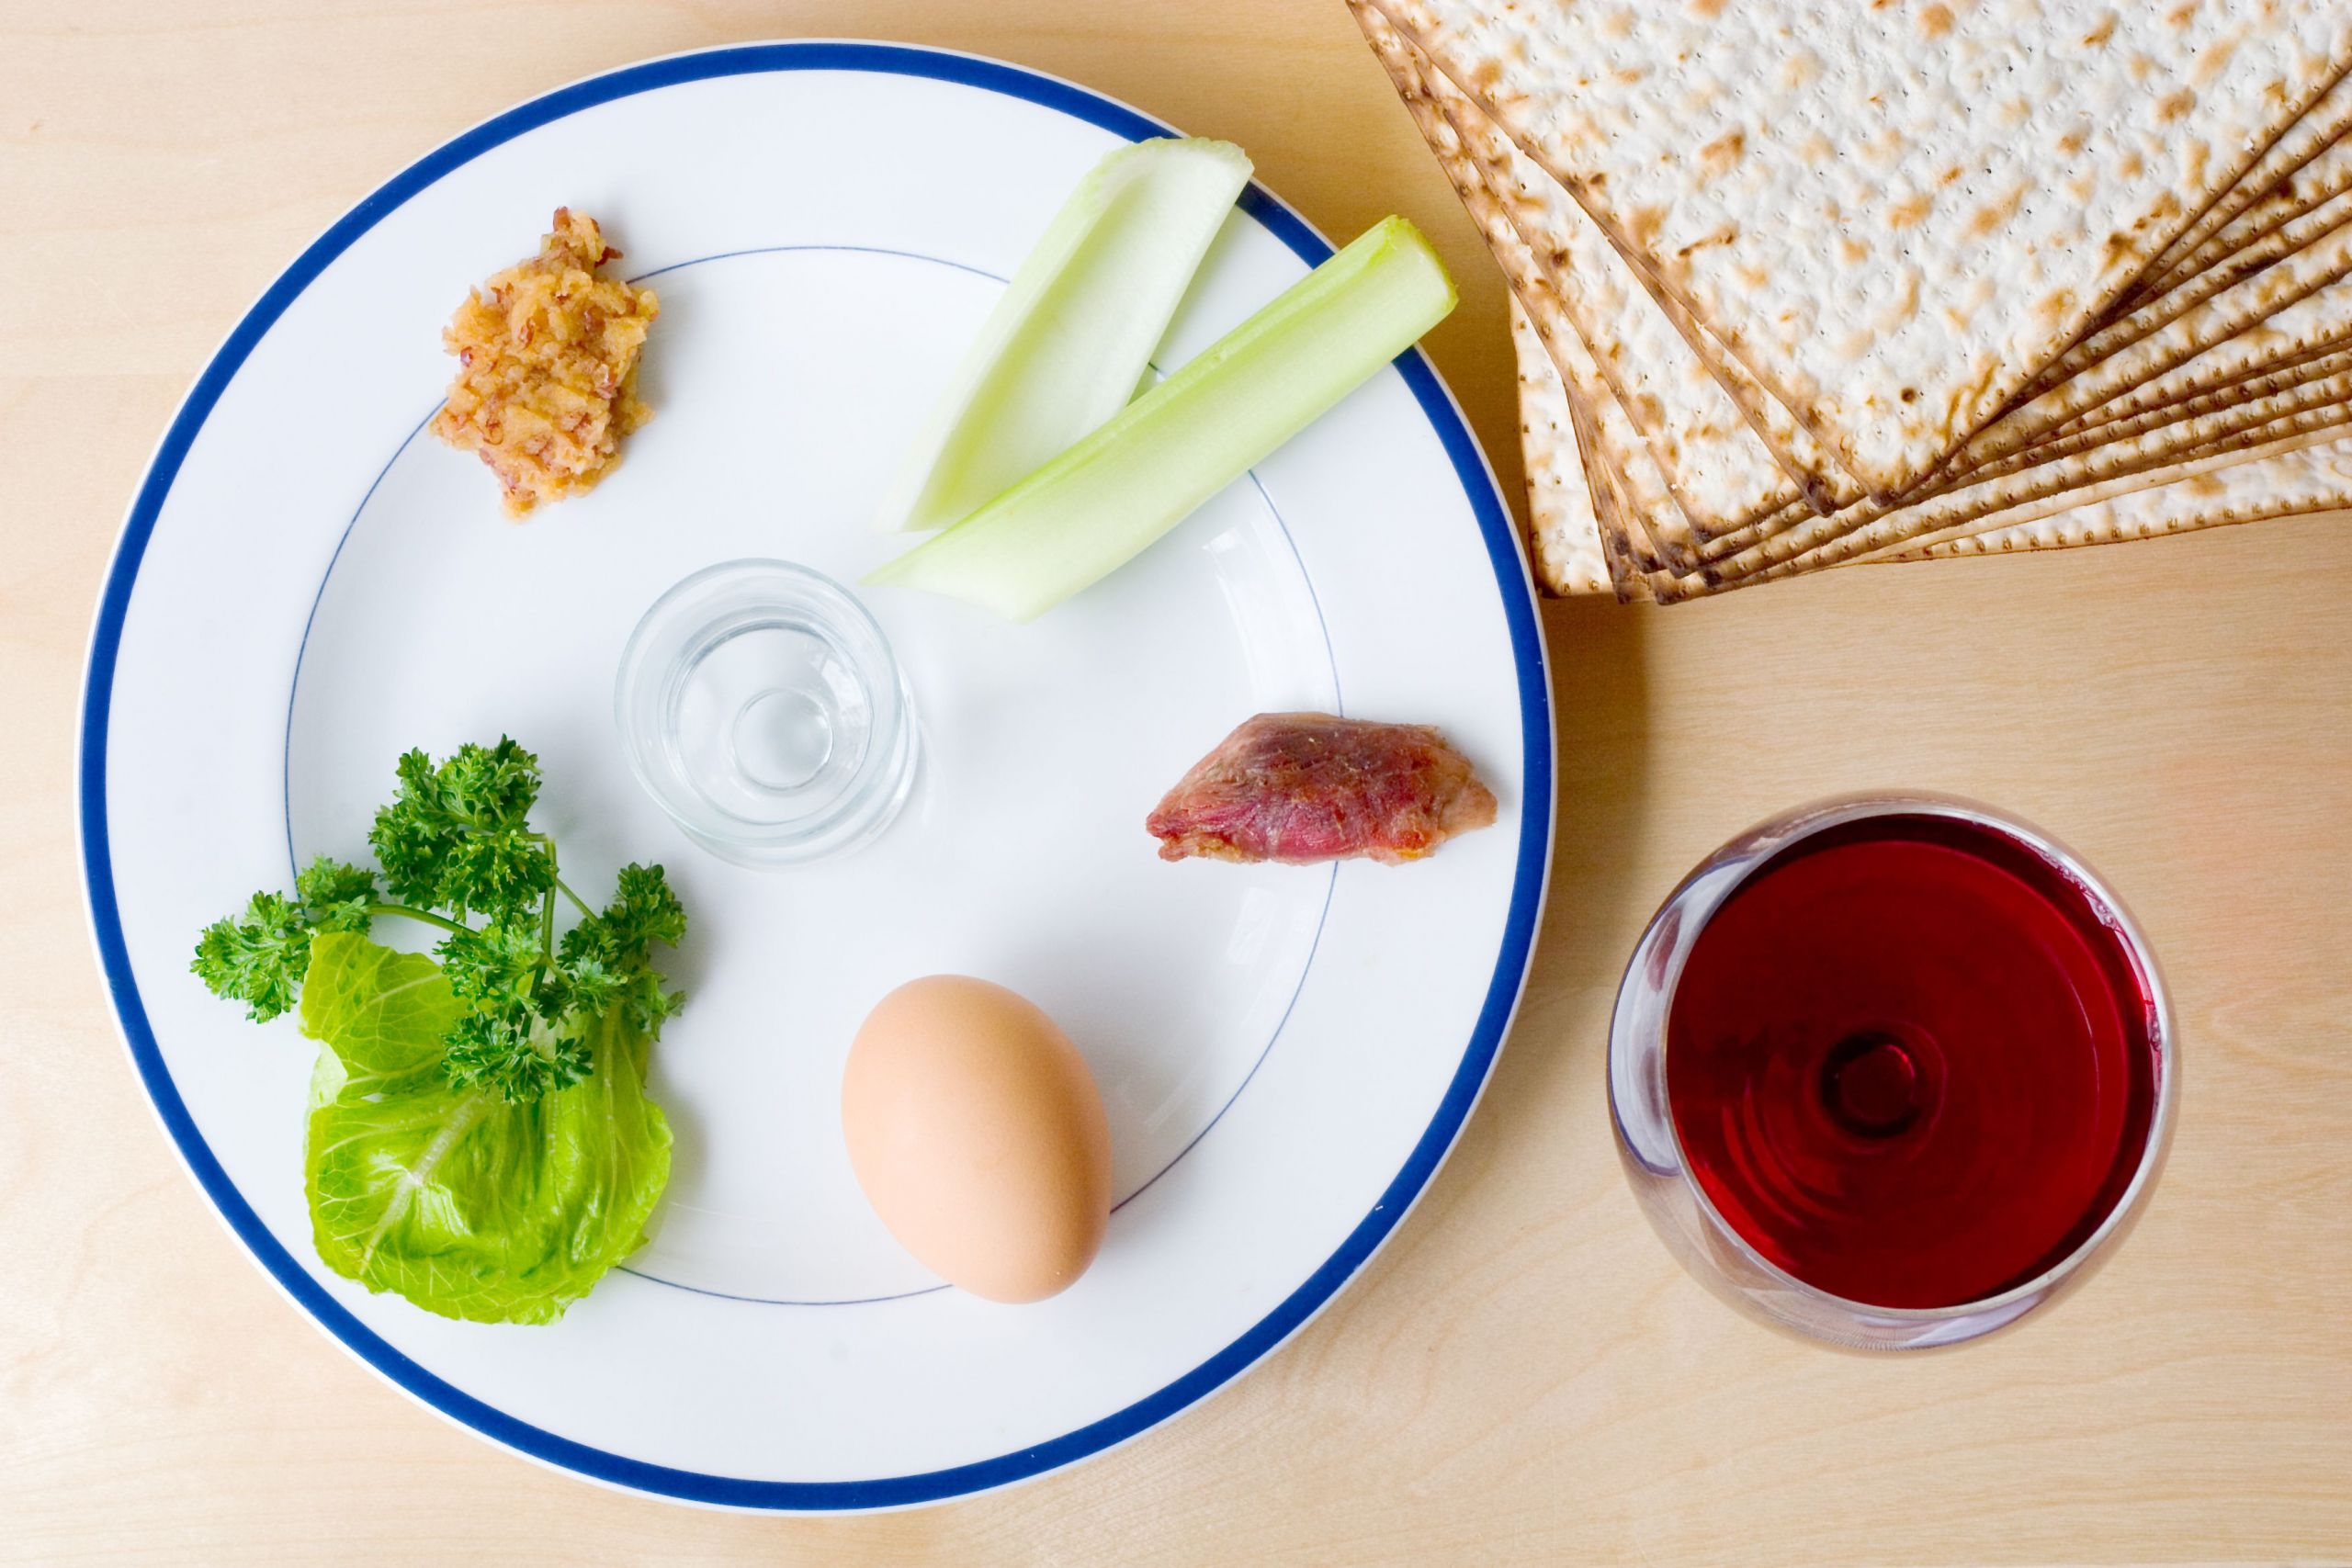 Passover Menu Ideas 2018
 Plan Your Low Carb Passover Menu